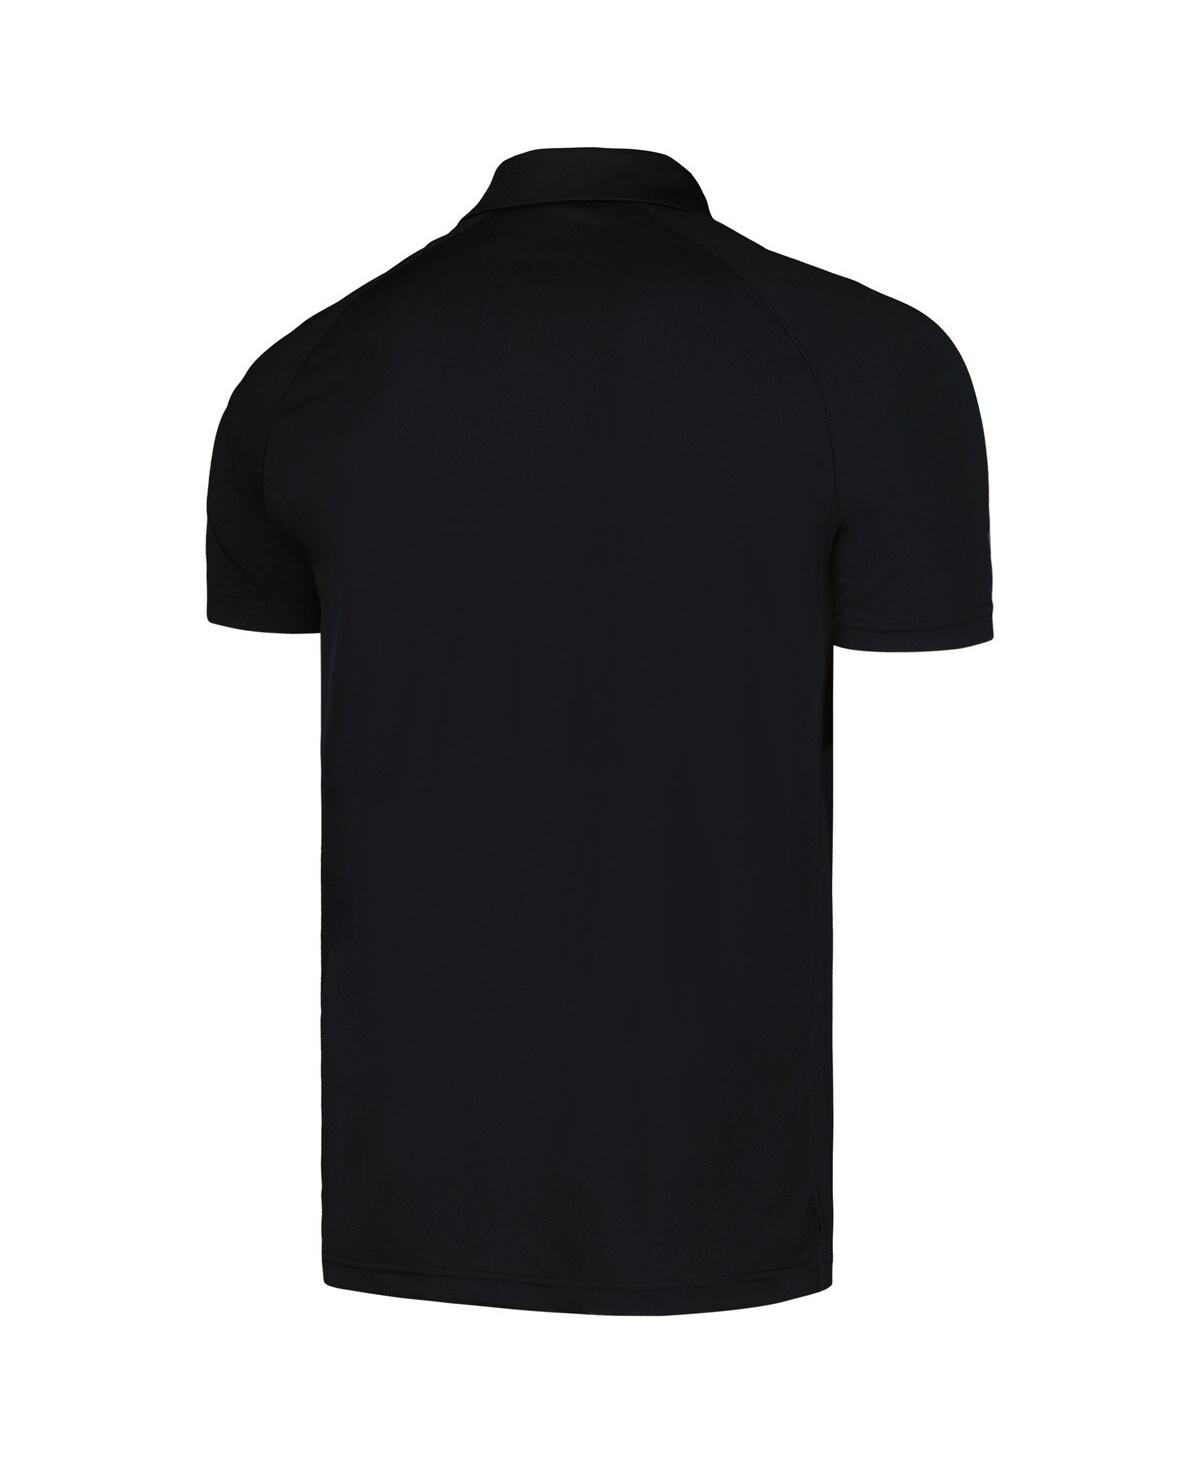 Shop Levelwear Men's  Black Chicago White Sox Sector Batter Up Raglan Polo Shirt